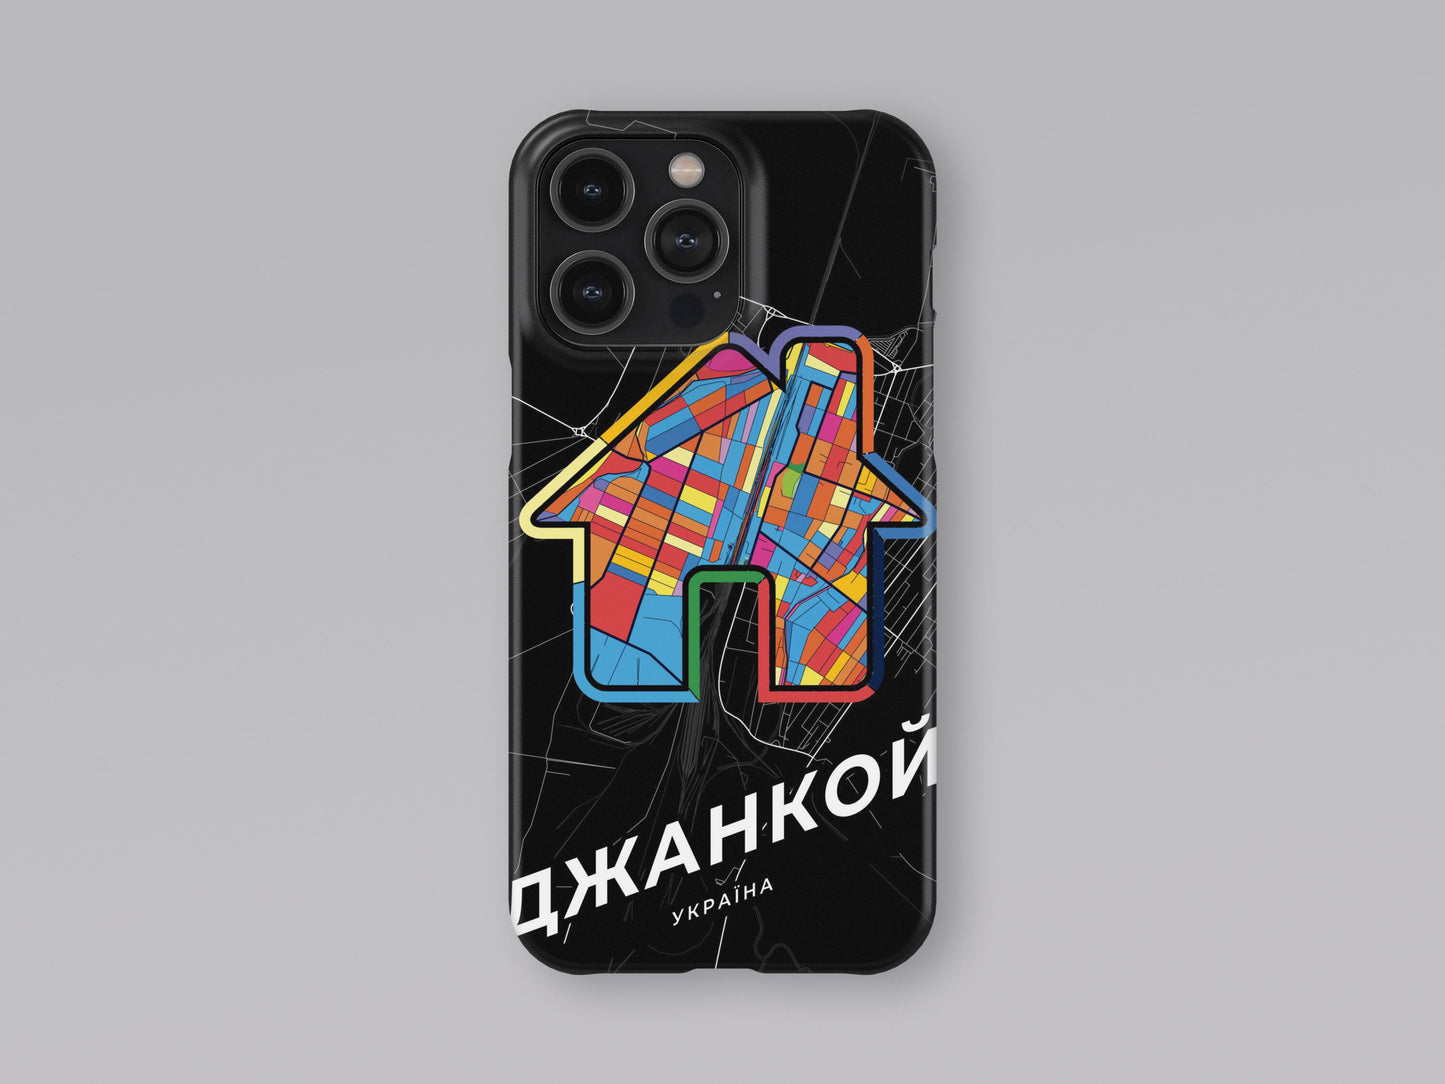 Dzhankoy Ukraine slim phone case with colorful icon. Birthday, wedding or housewarming gift. Couple match cases. 3